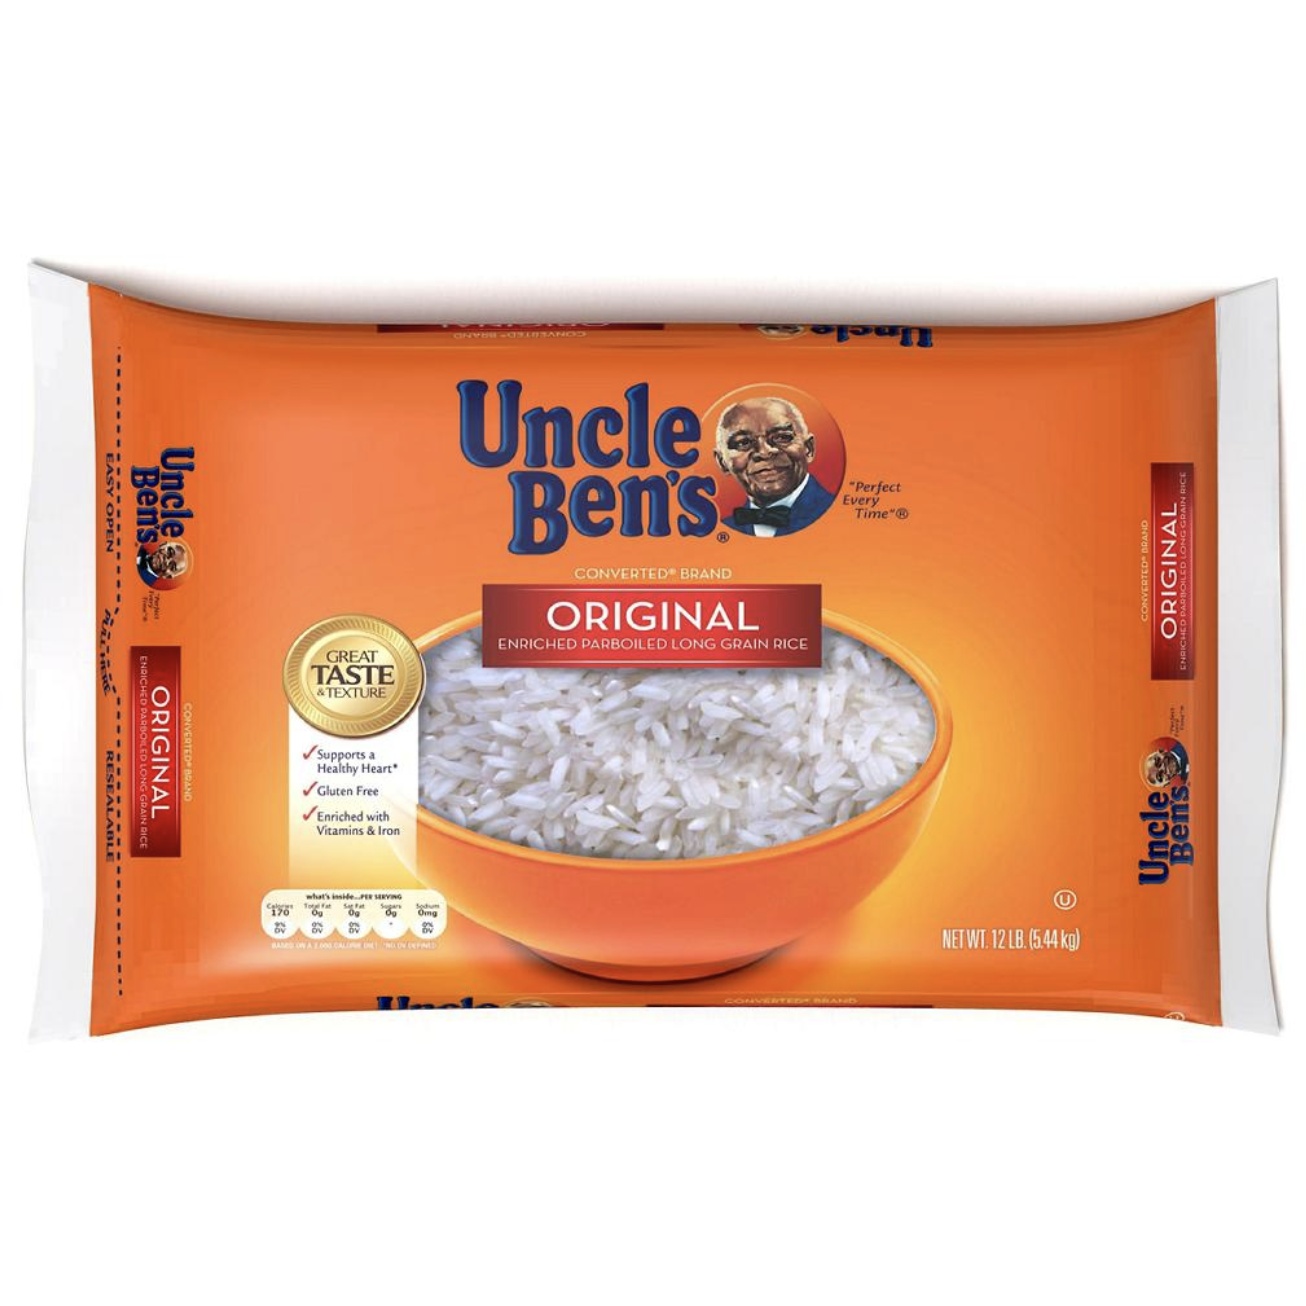 Uncle Ben's Original Long Grain Rice, 12 lbs.